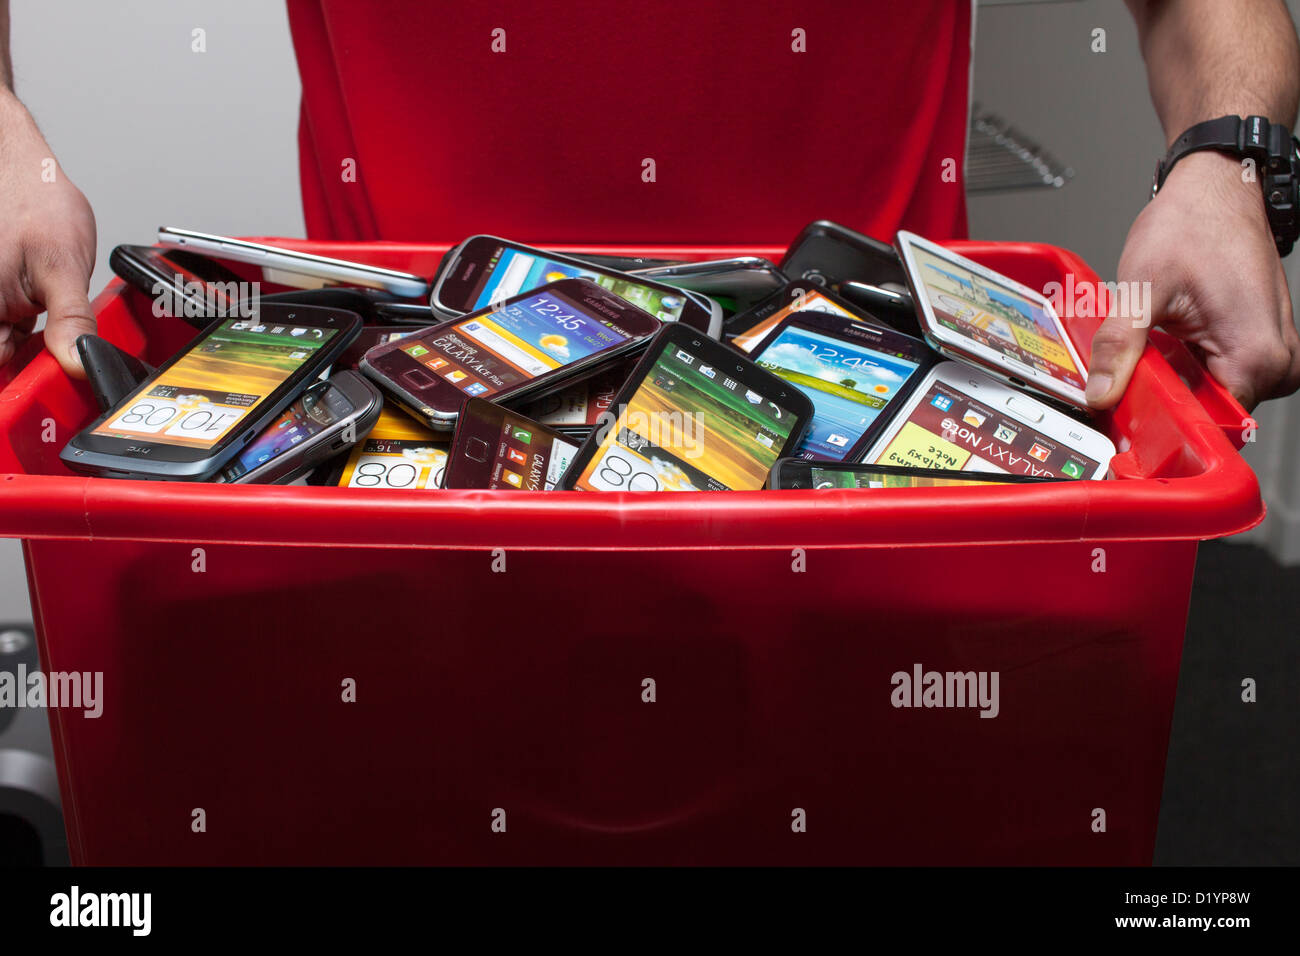 Elektronische Entsorgung - Karton voll mit alten Smart Phones Stockfoto